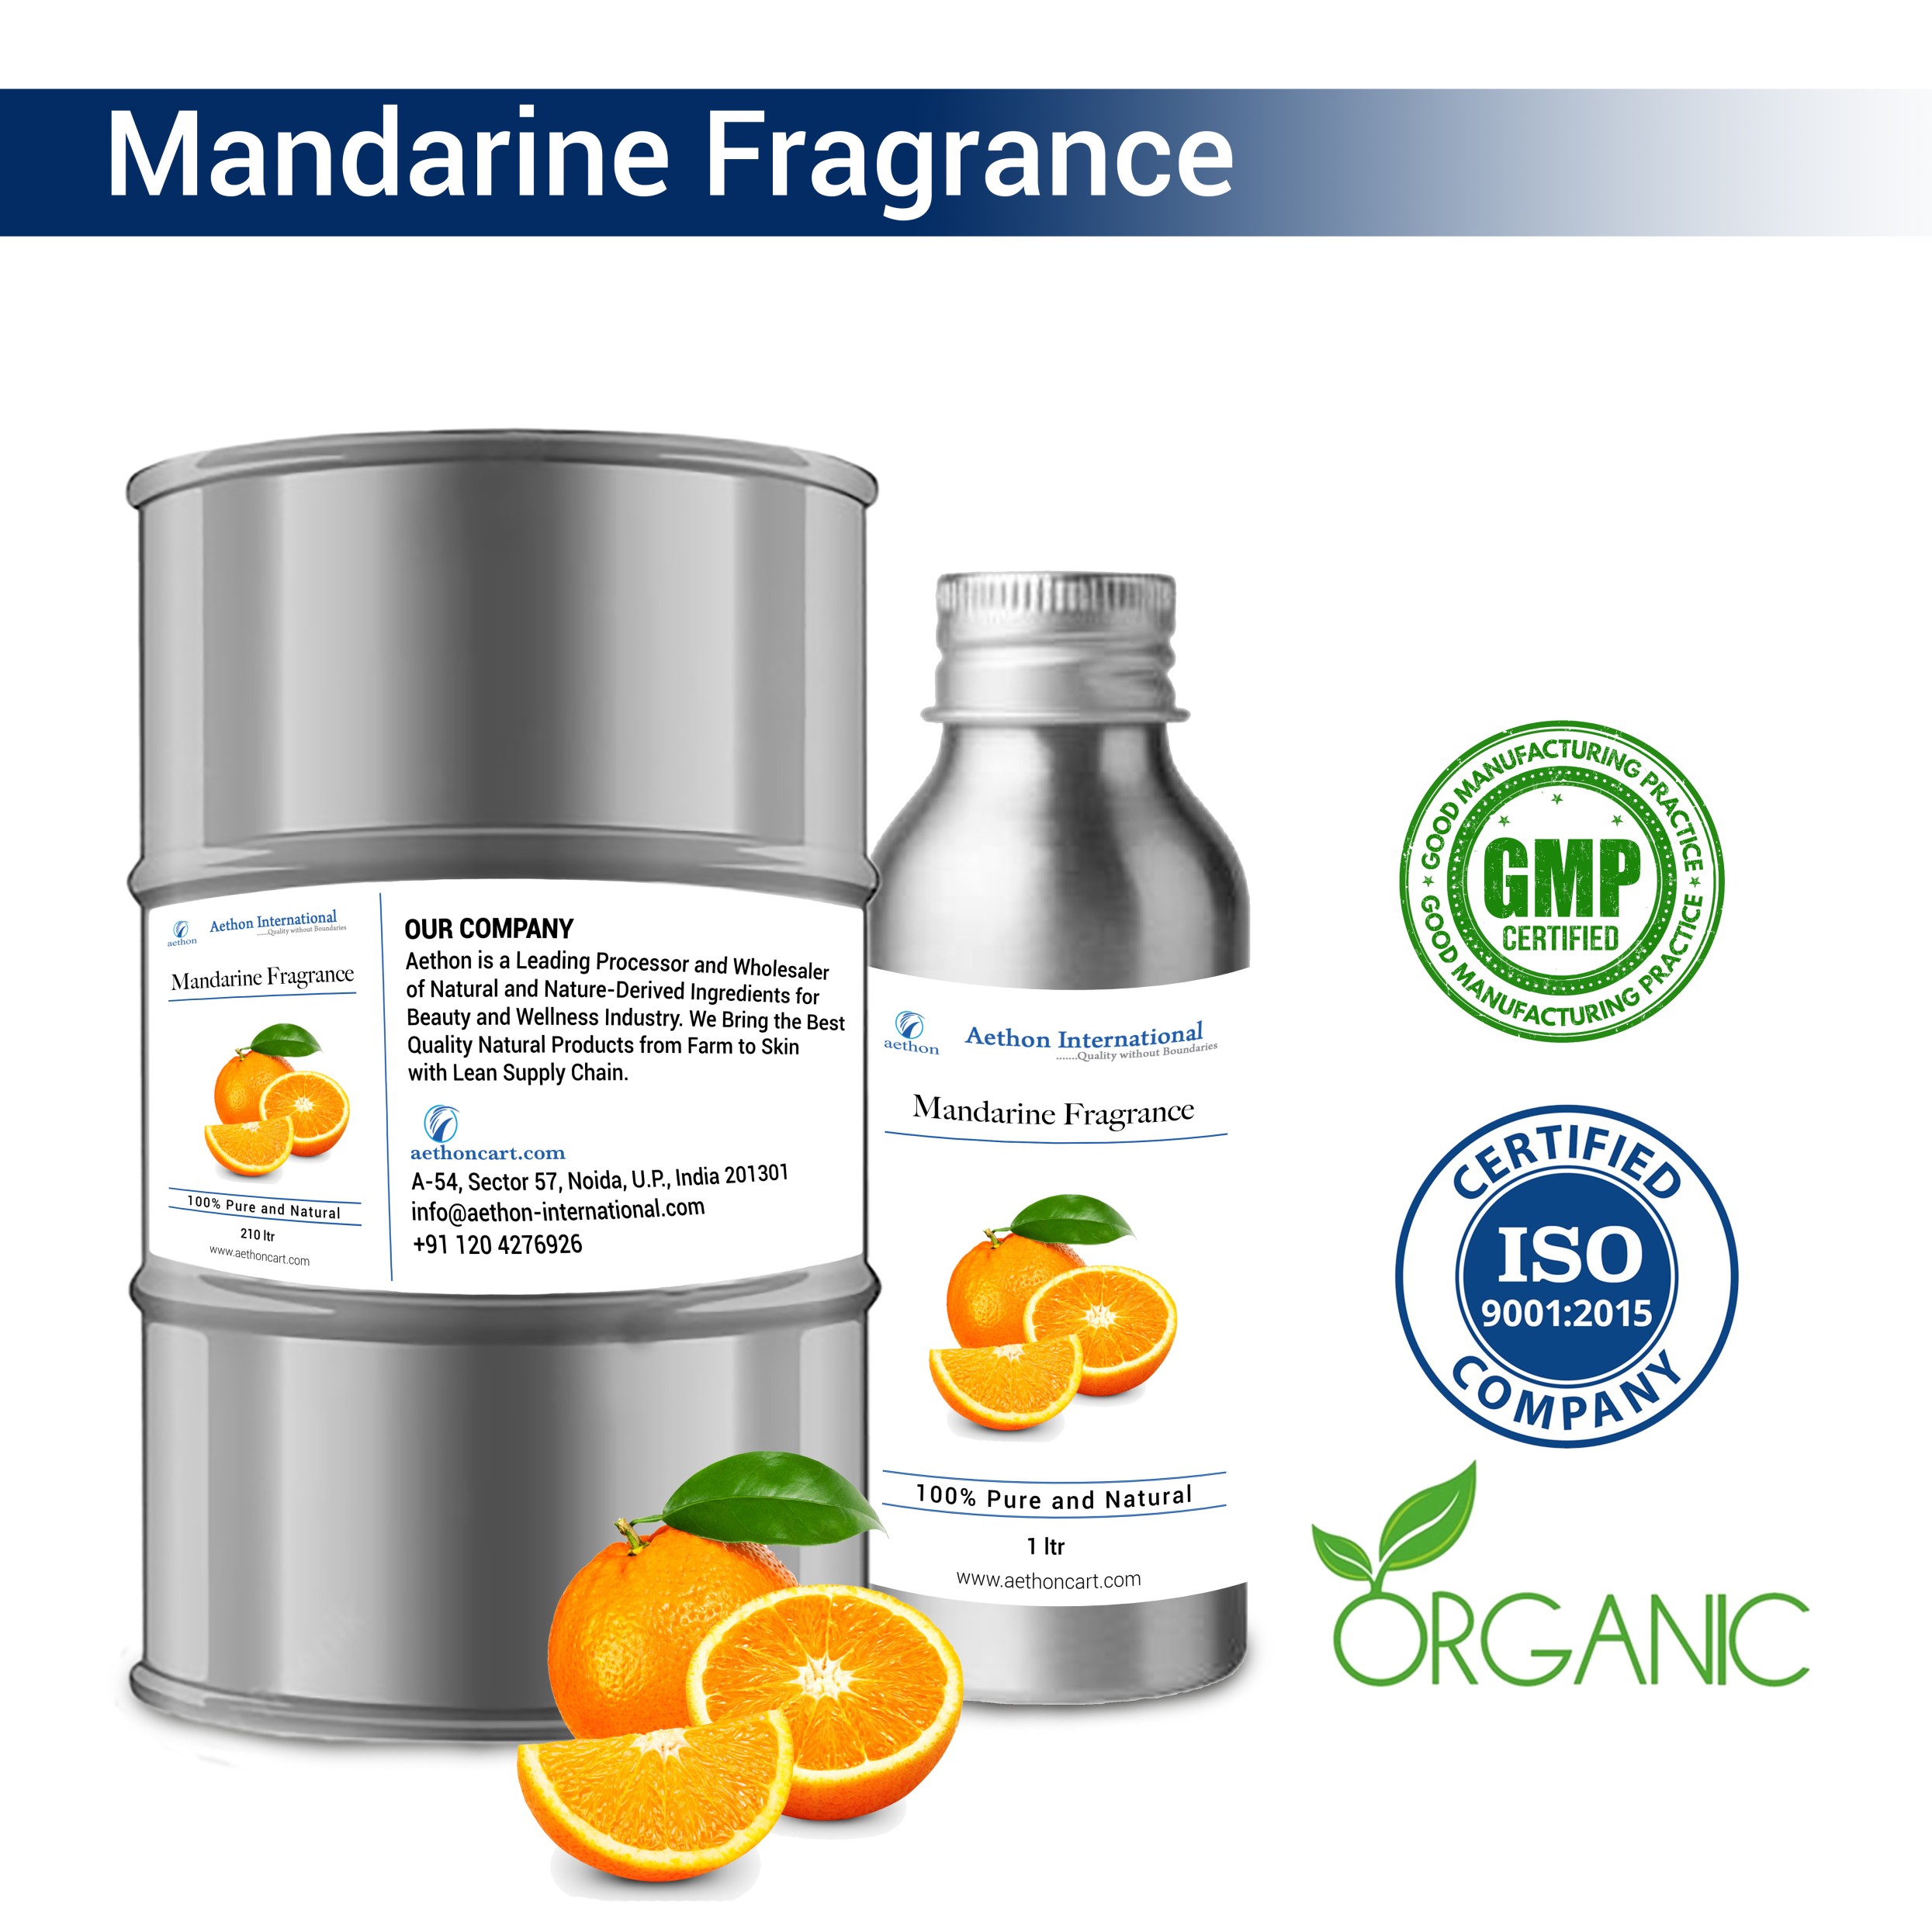 Mandarin Fragrance